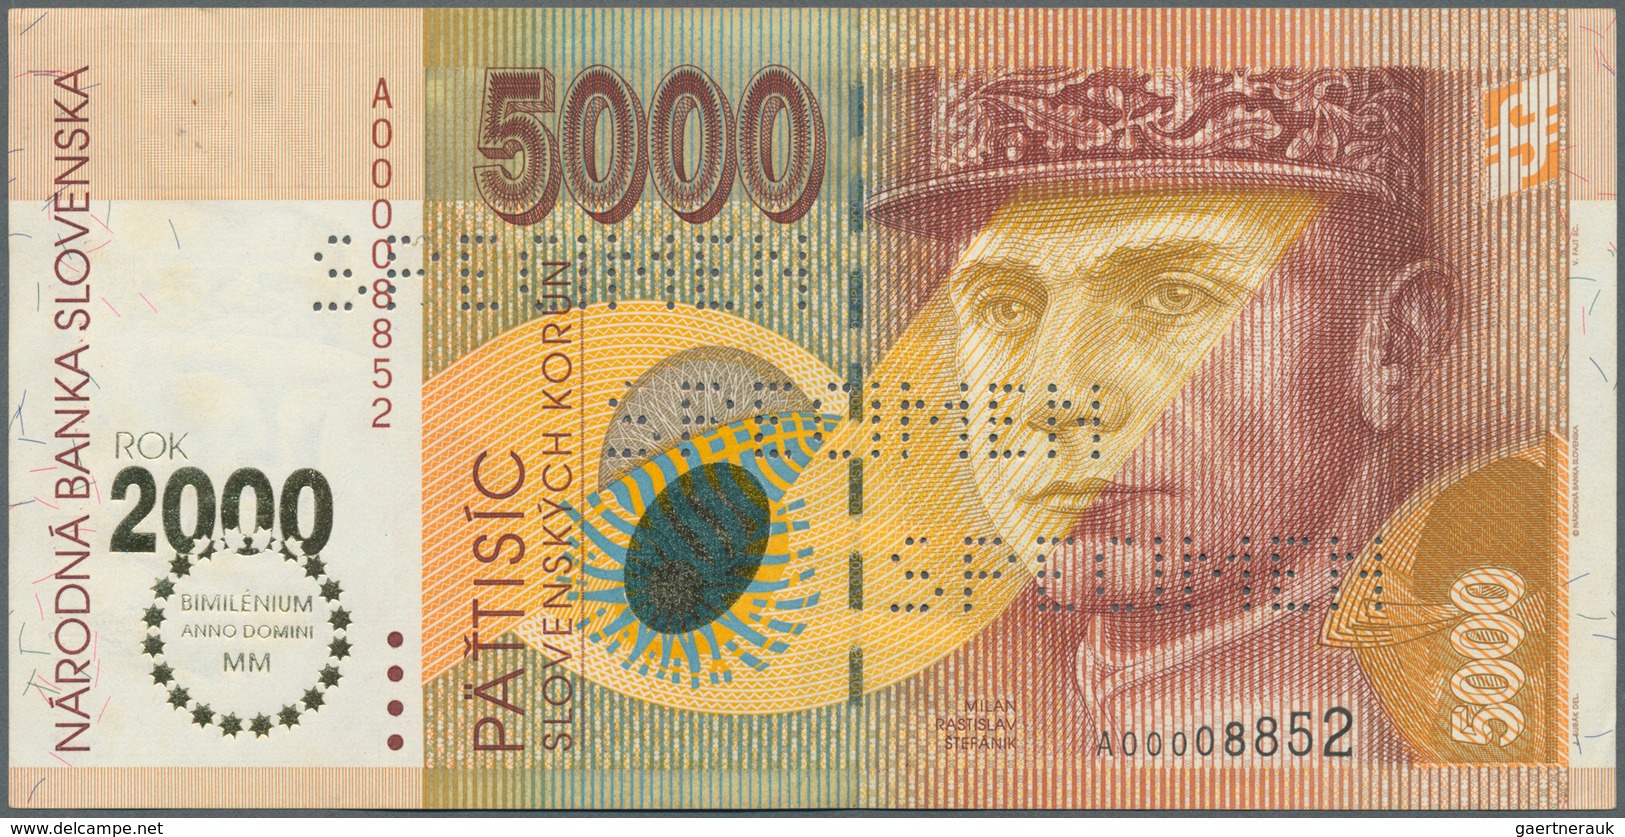 02377 Slovakia / Slovakei: 5000 Korun Commemorative Issue 2000 P. 40s With Regular Serial Number And Speci - Slovakia